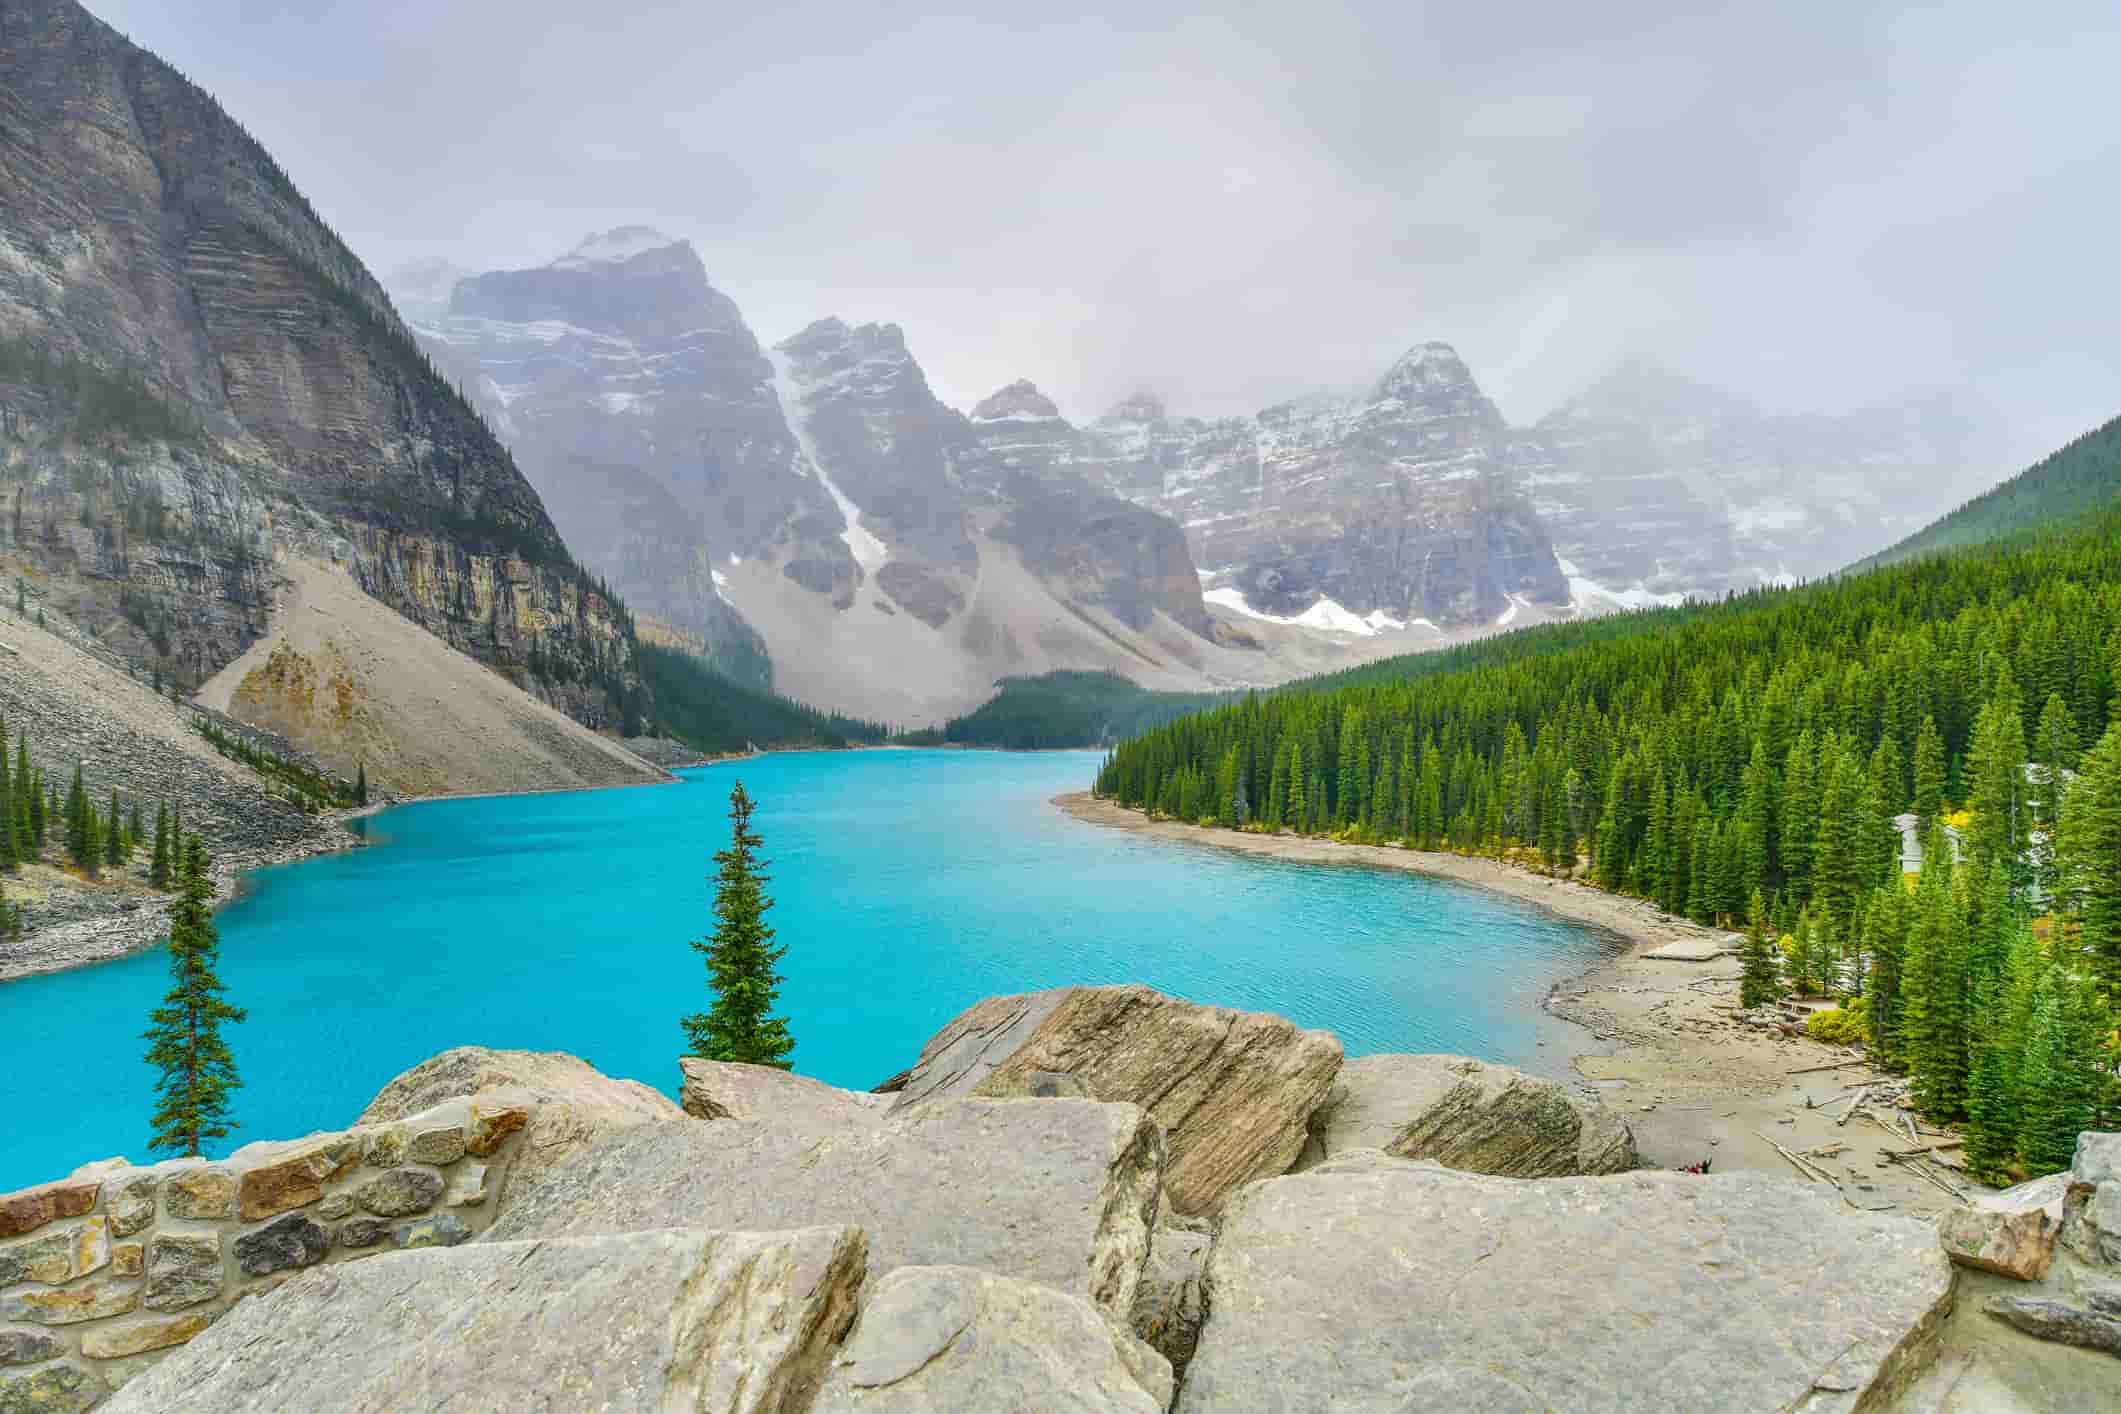 Landscape of Moraine Lake in Banff National Park, Alberta, Canada